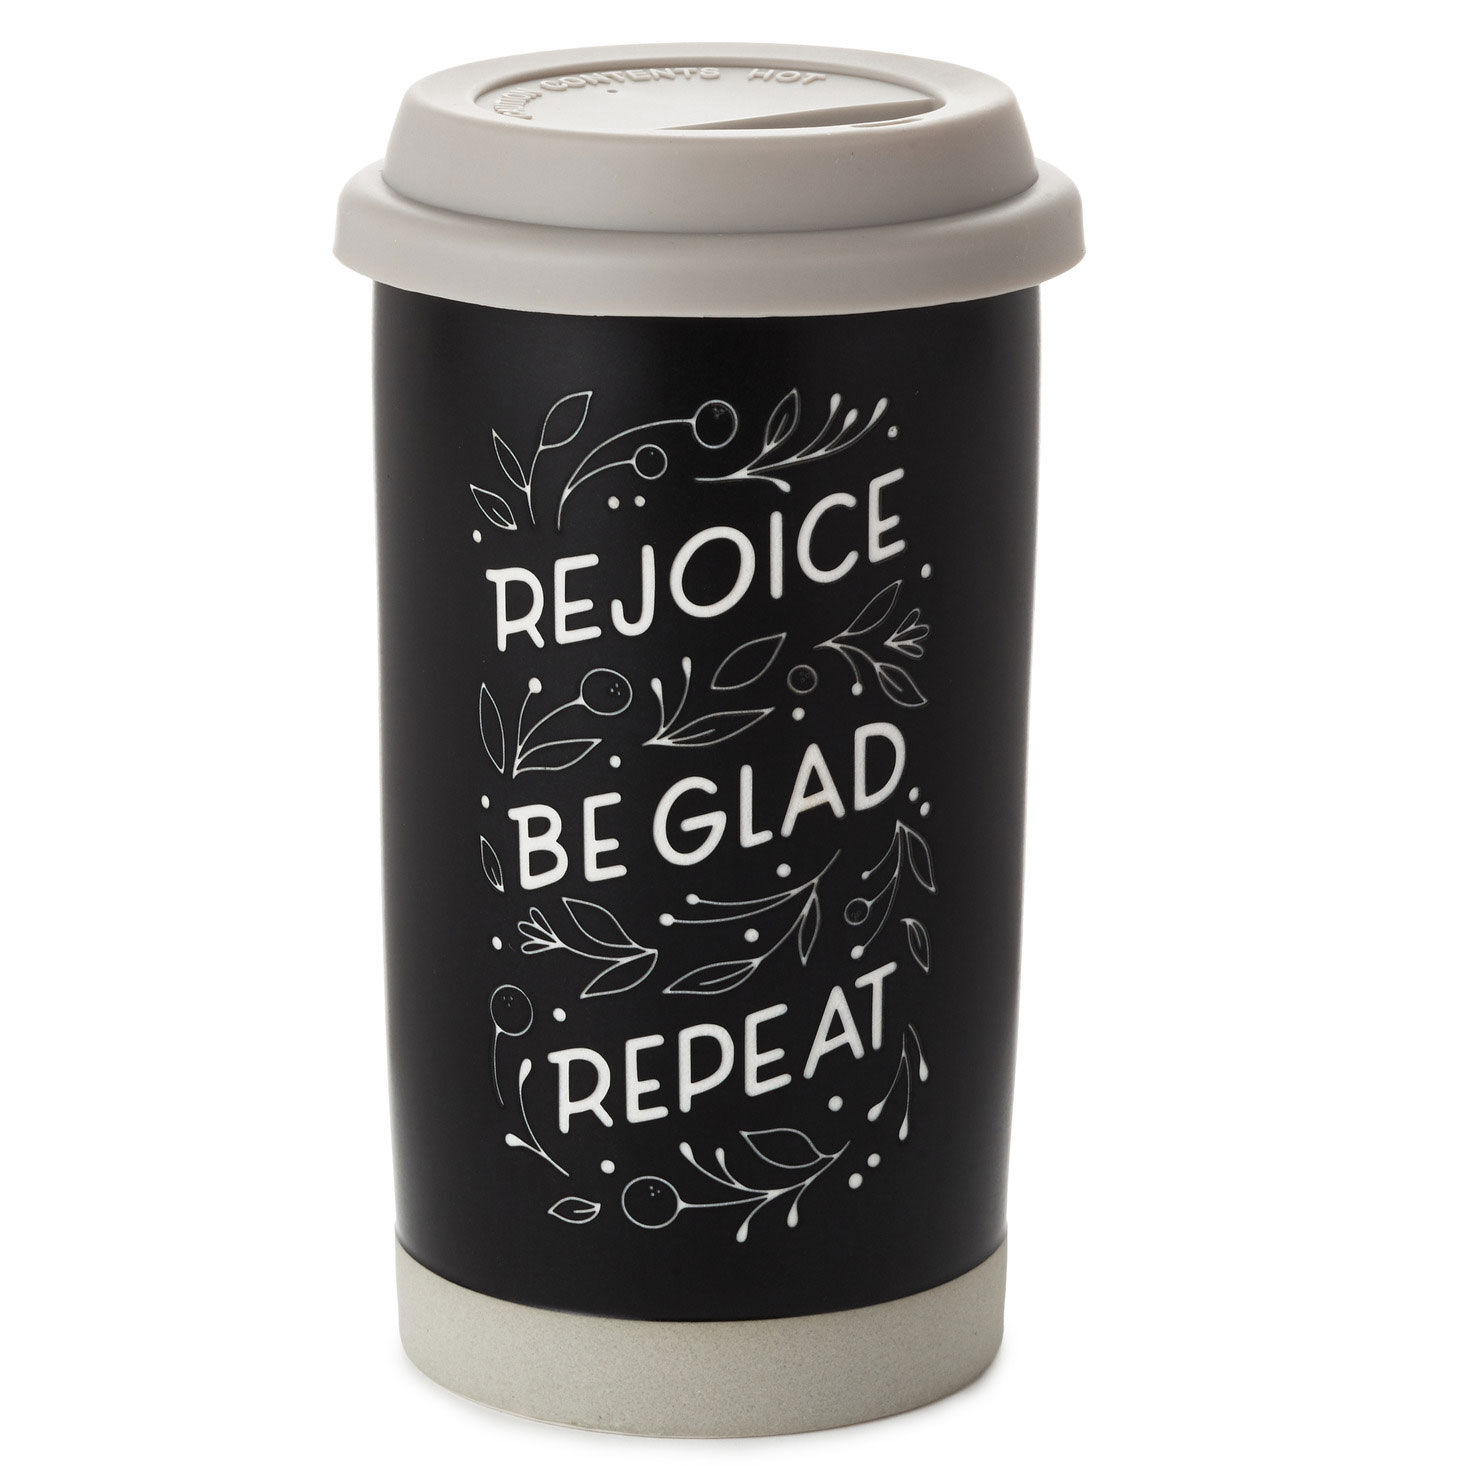 Rejoice Collection Four Piece Ceramic Coffee Mug Set